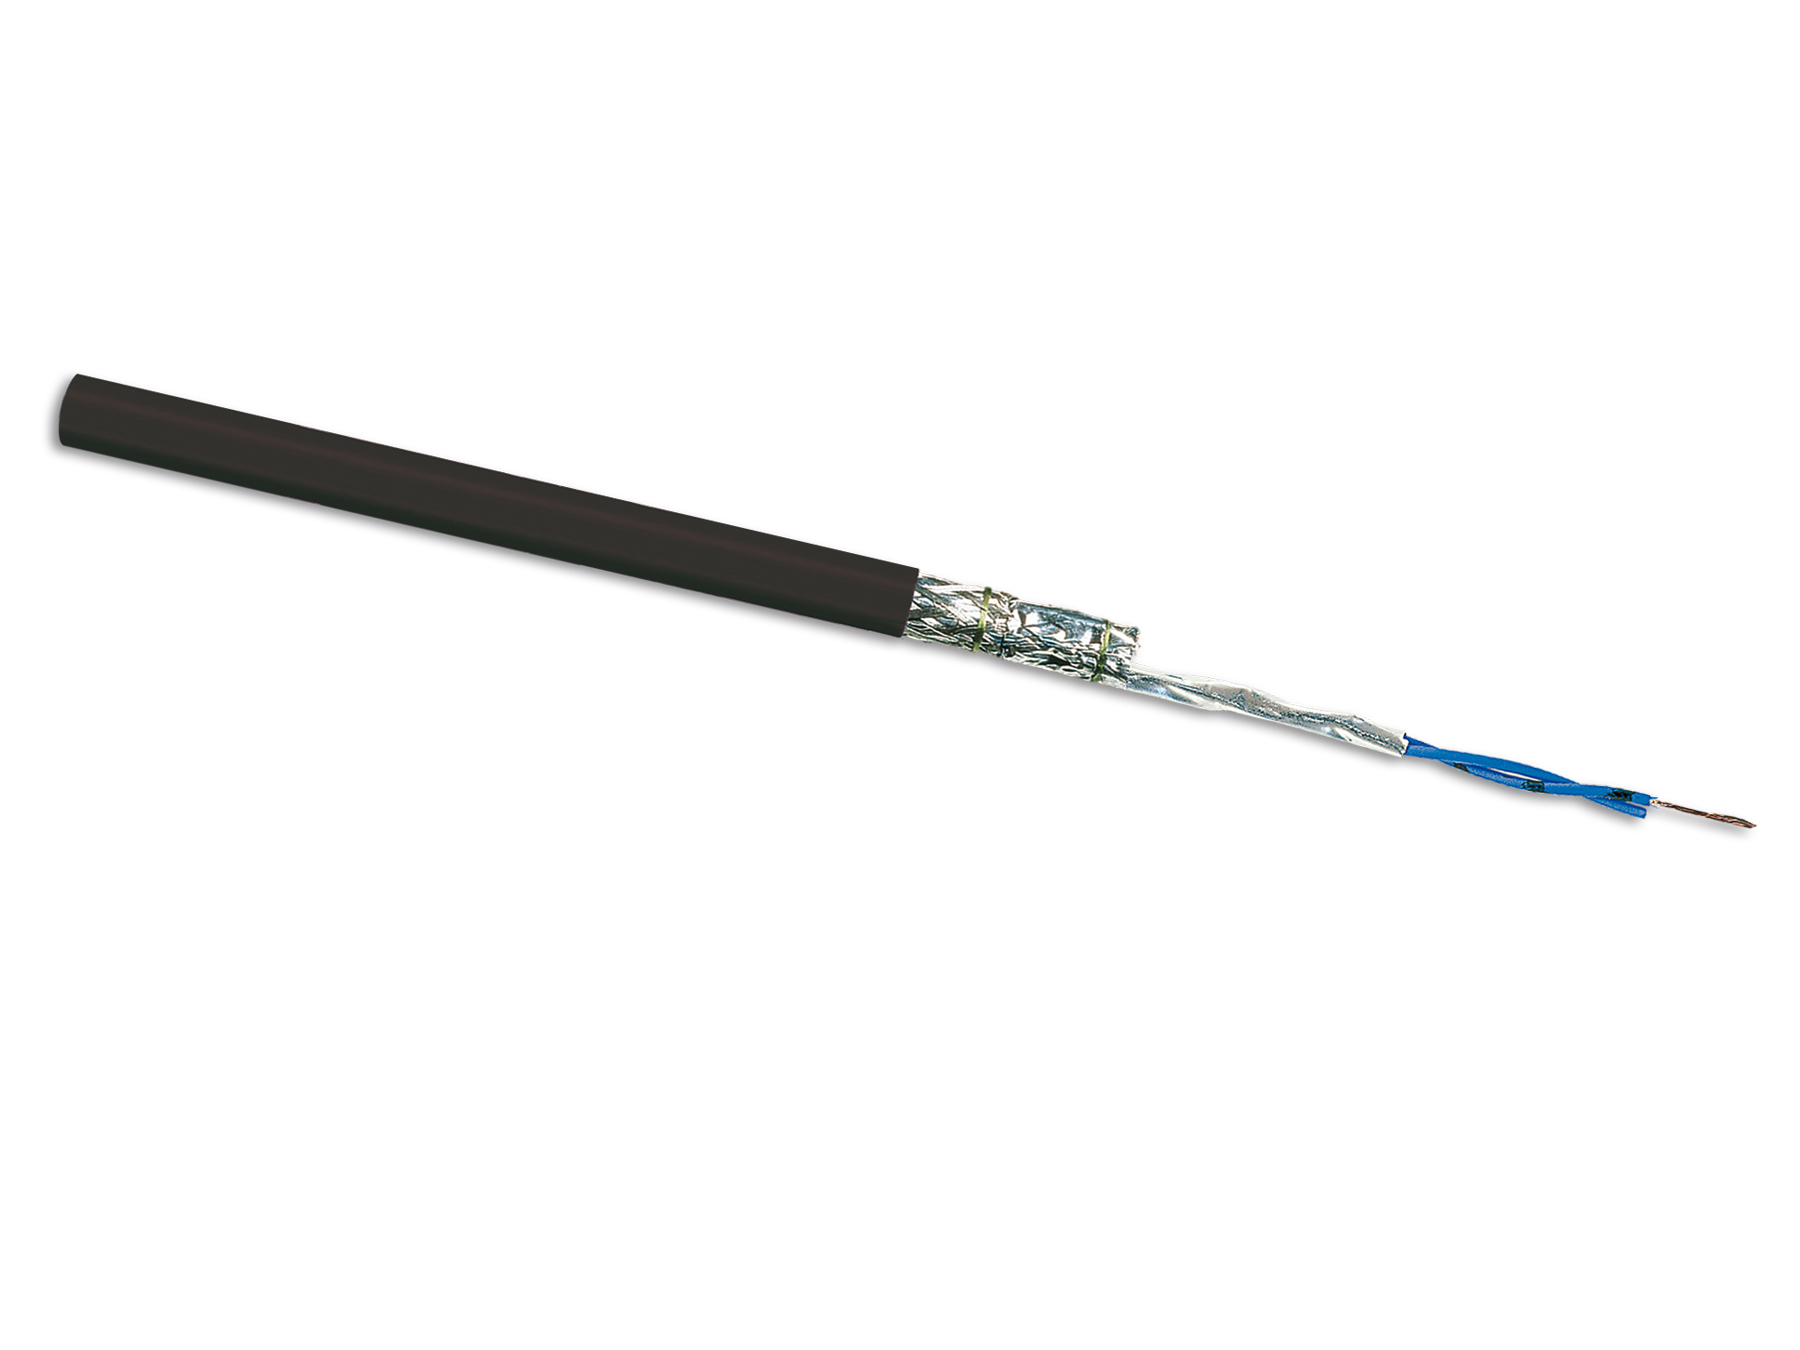 Data Storage Cables 26awg 5 Meter IB QDR p/n C9797-5M-IB: QSFP+ QSFP+ Electronics